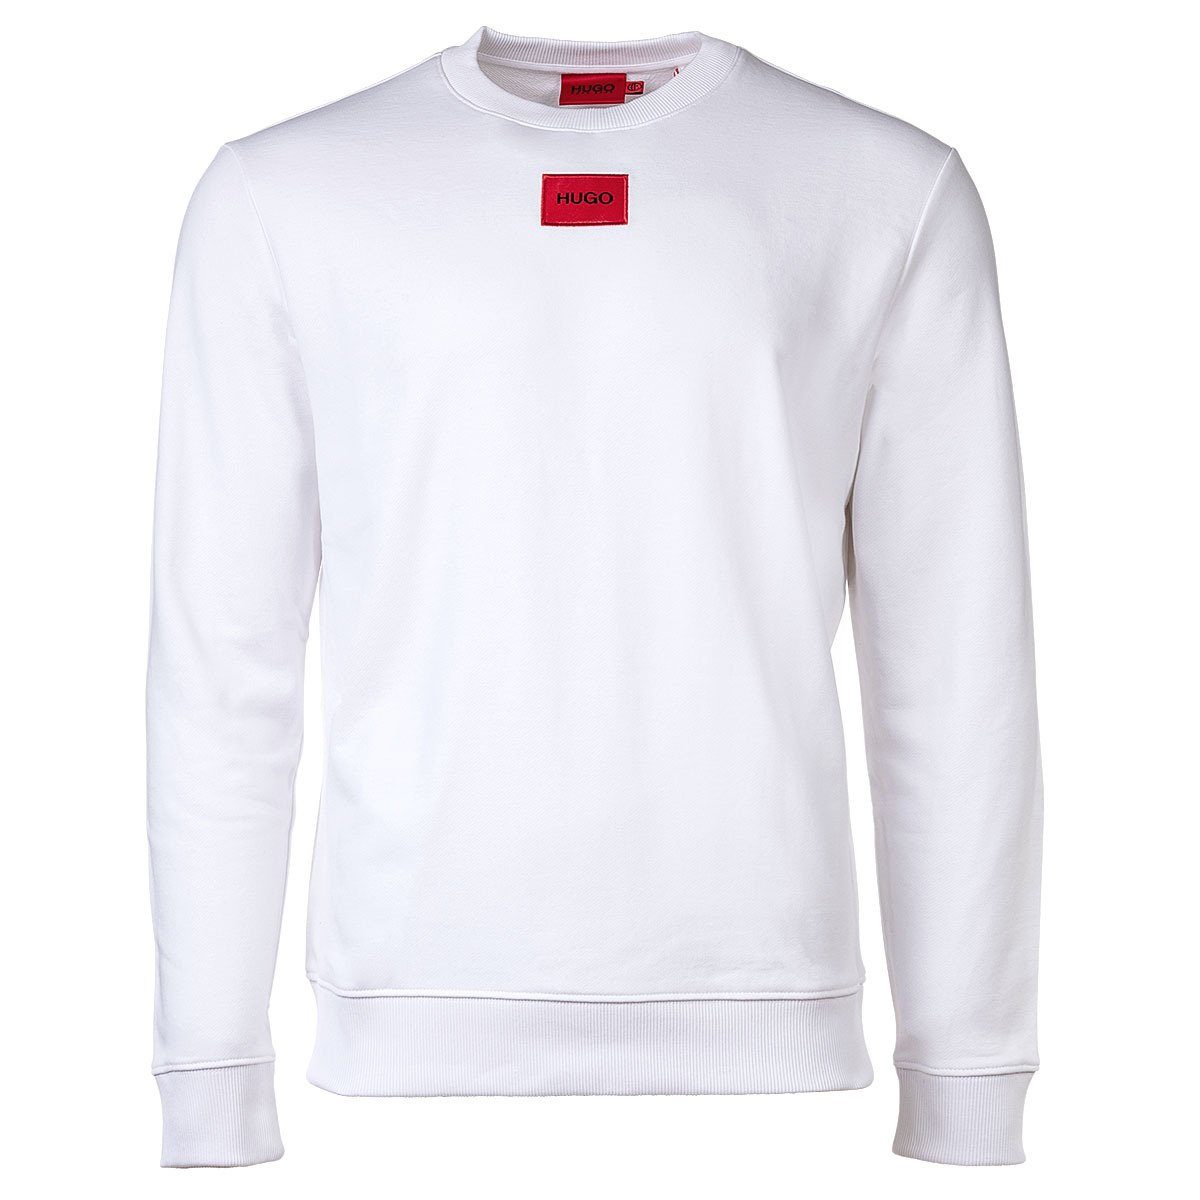 HUGO Sweater, Weiß Sweatshirt Diragol212 Rundhals Herren Sweatshirt, -